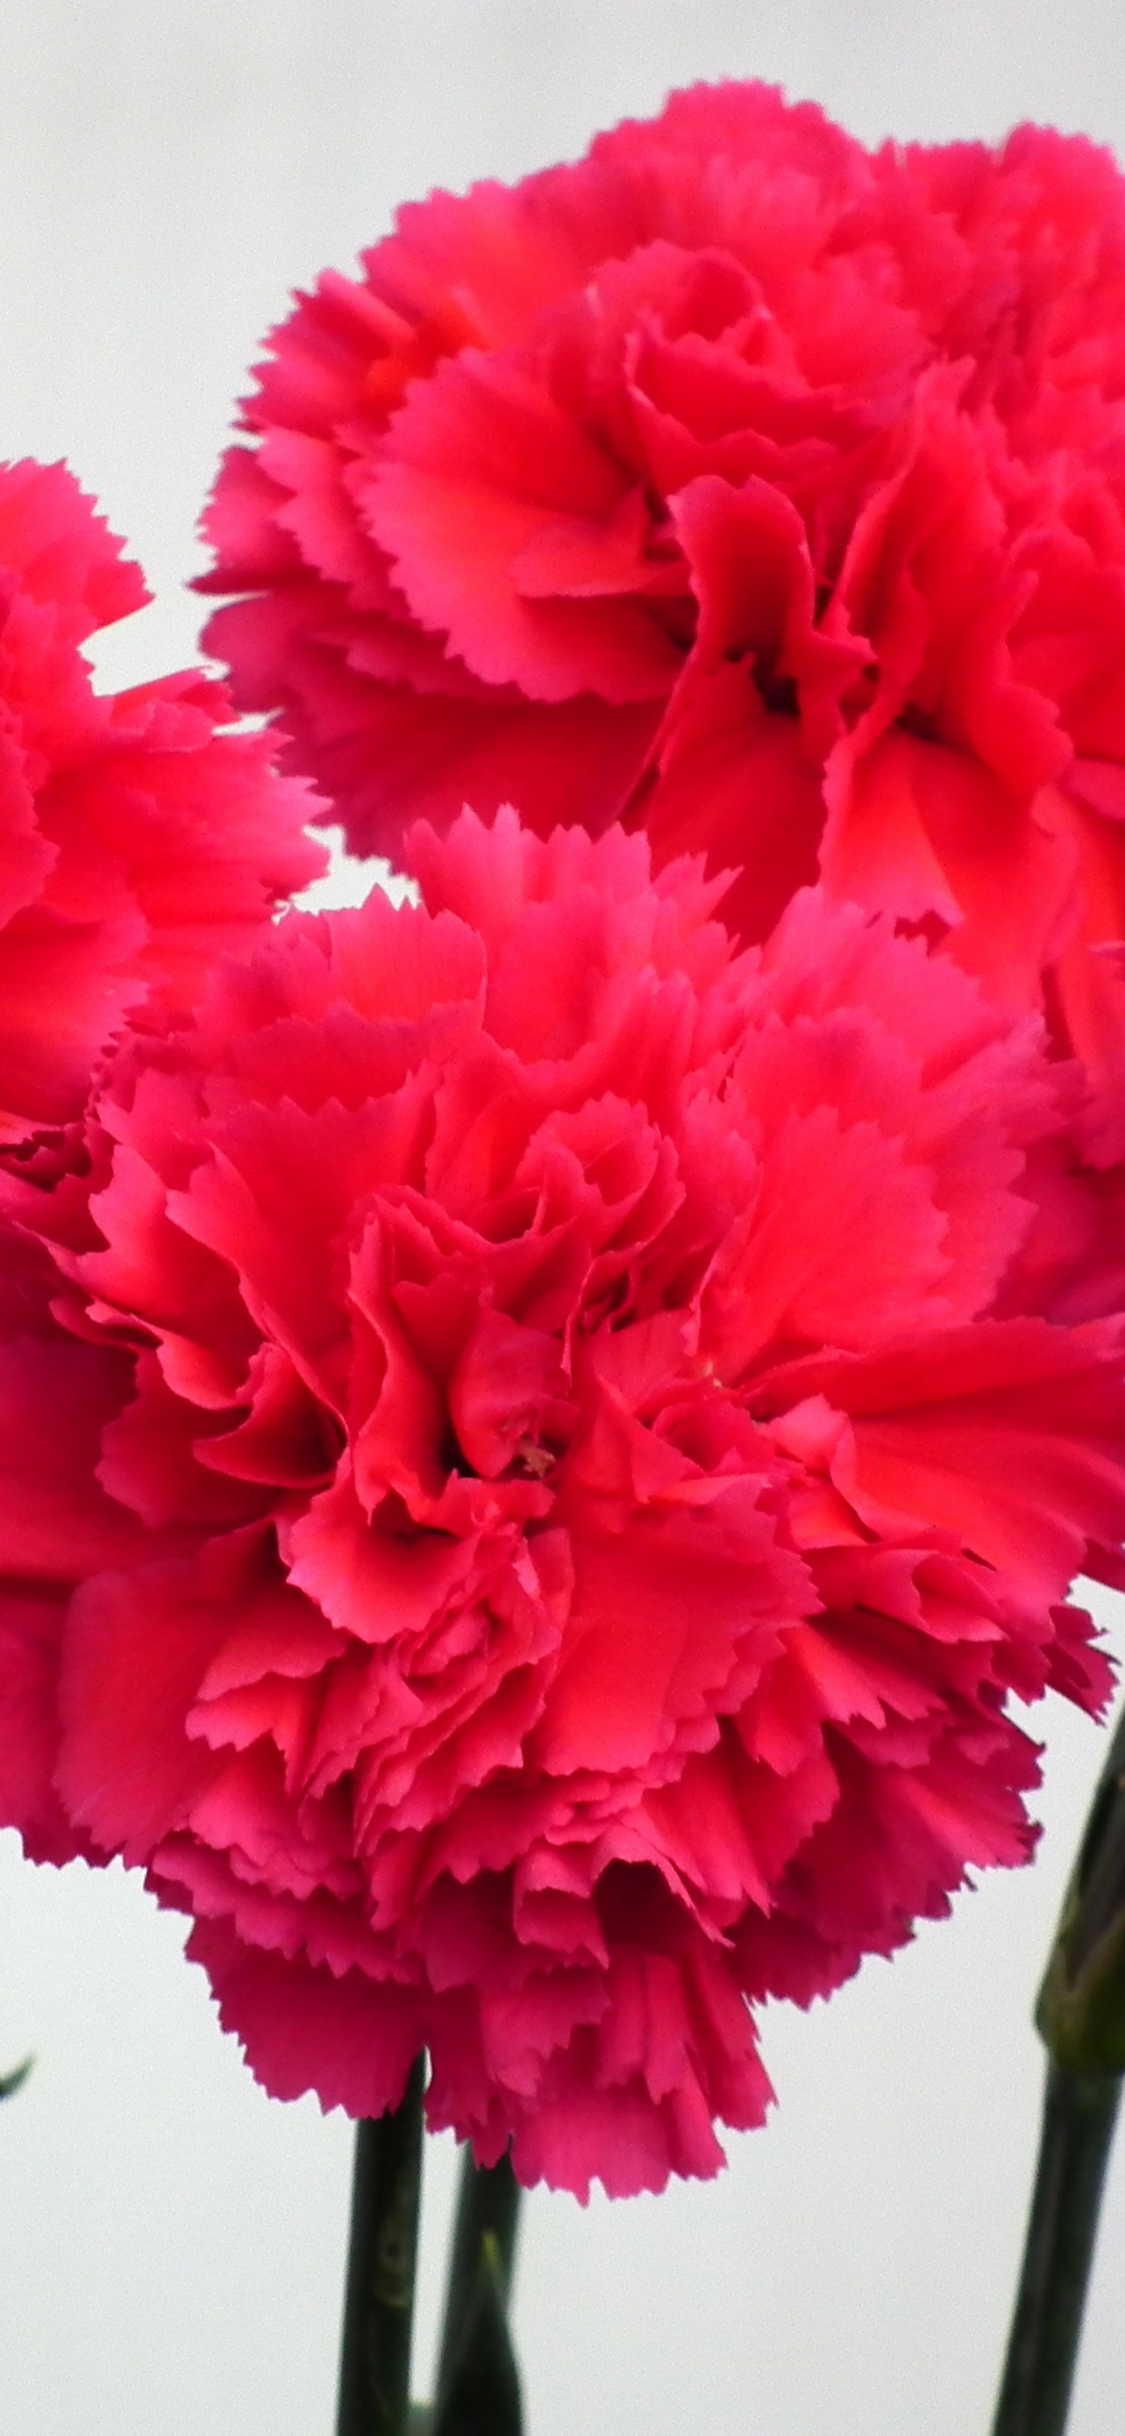 Free download Red Carnation Flower Wallpapers [3648x2736] for your Desktop, Mobile & Tablet